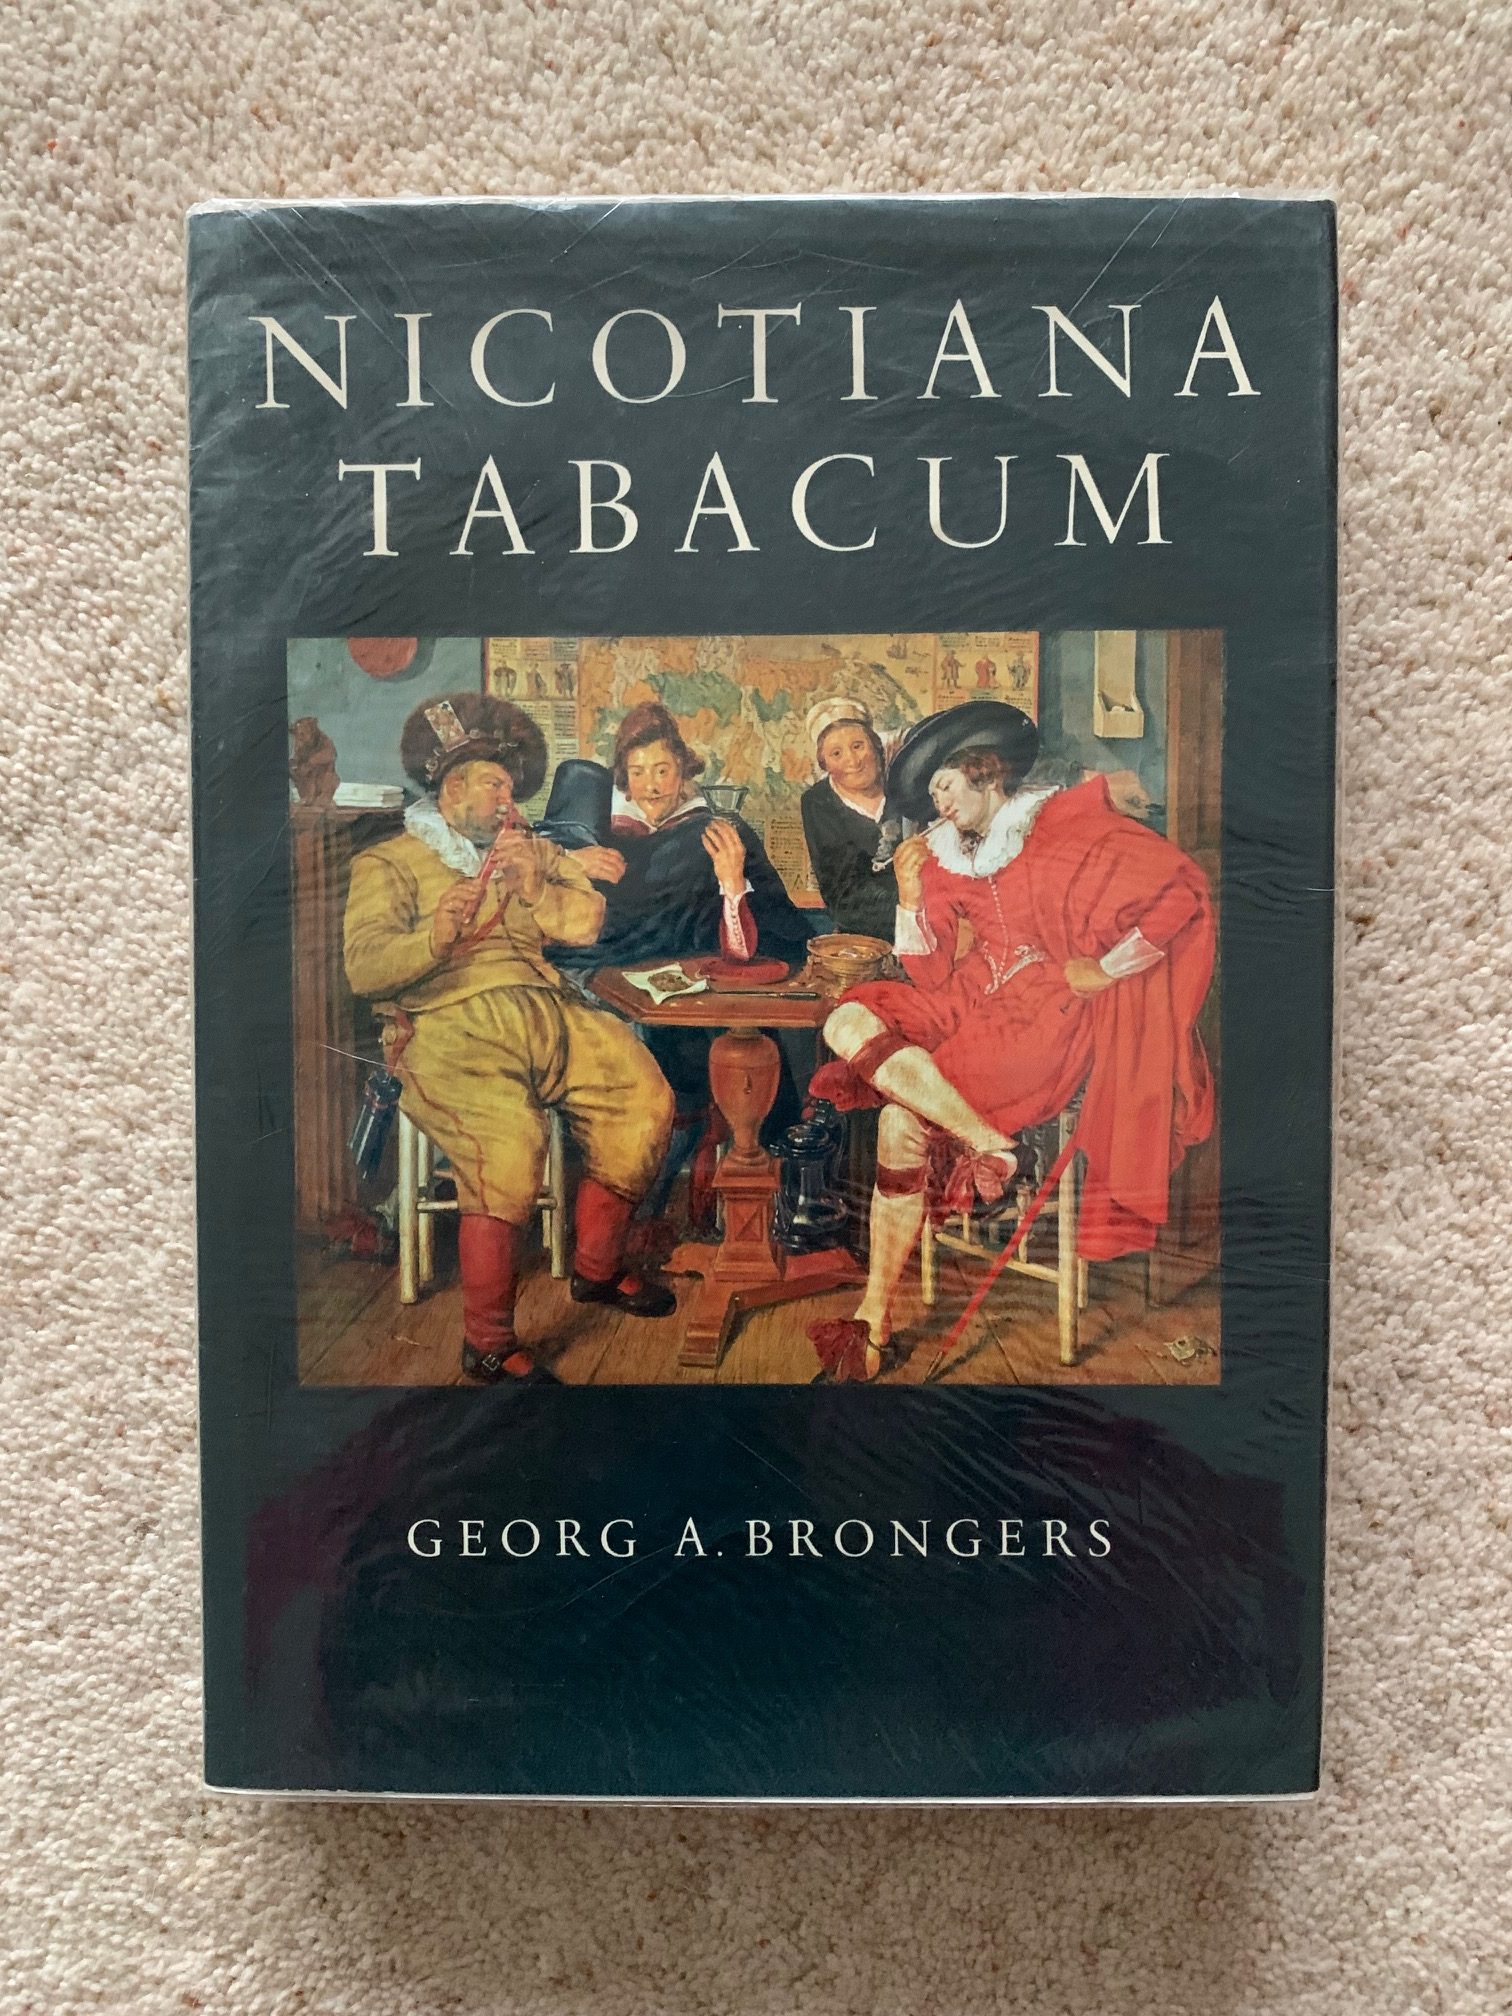 Nicotiana Tabacum - Georg A Brongers Image